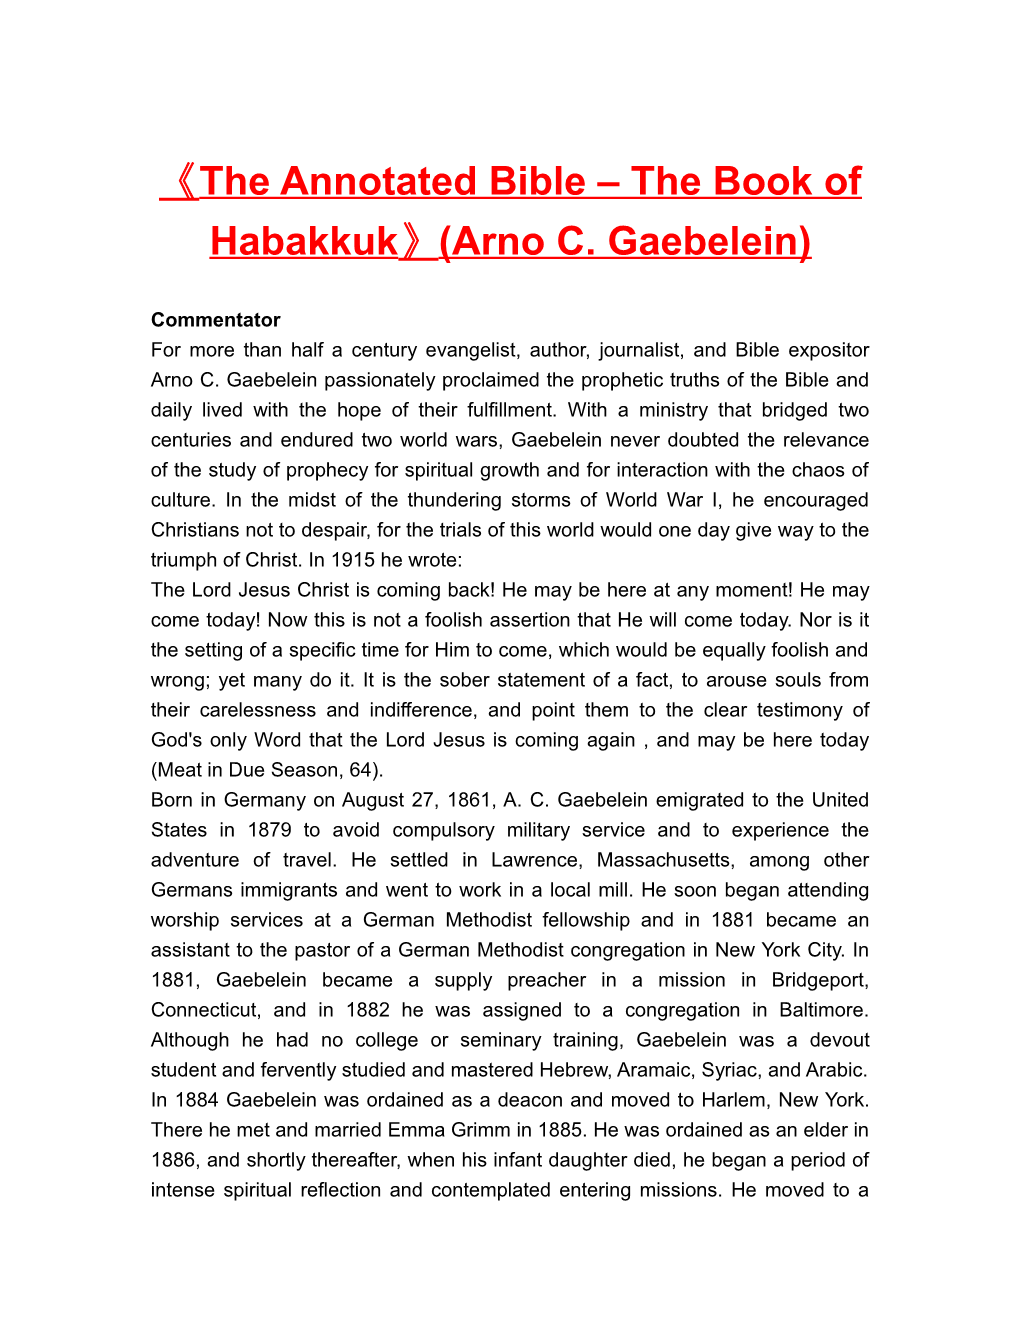 The Annotated Bible the Book of Habakkuk (Arno C. Gaebelein)